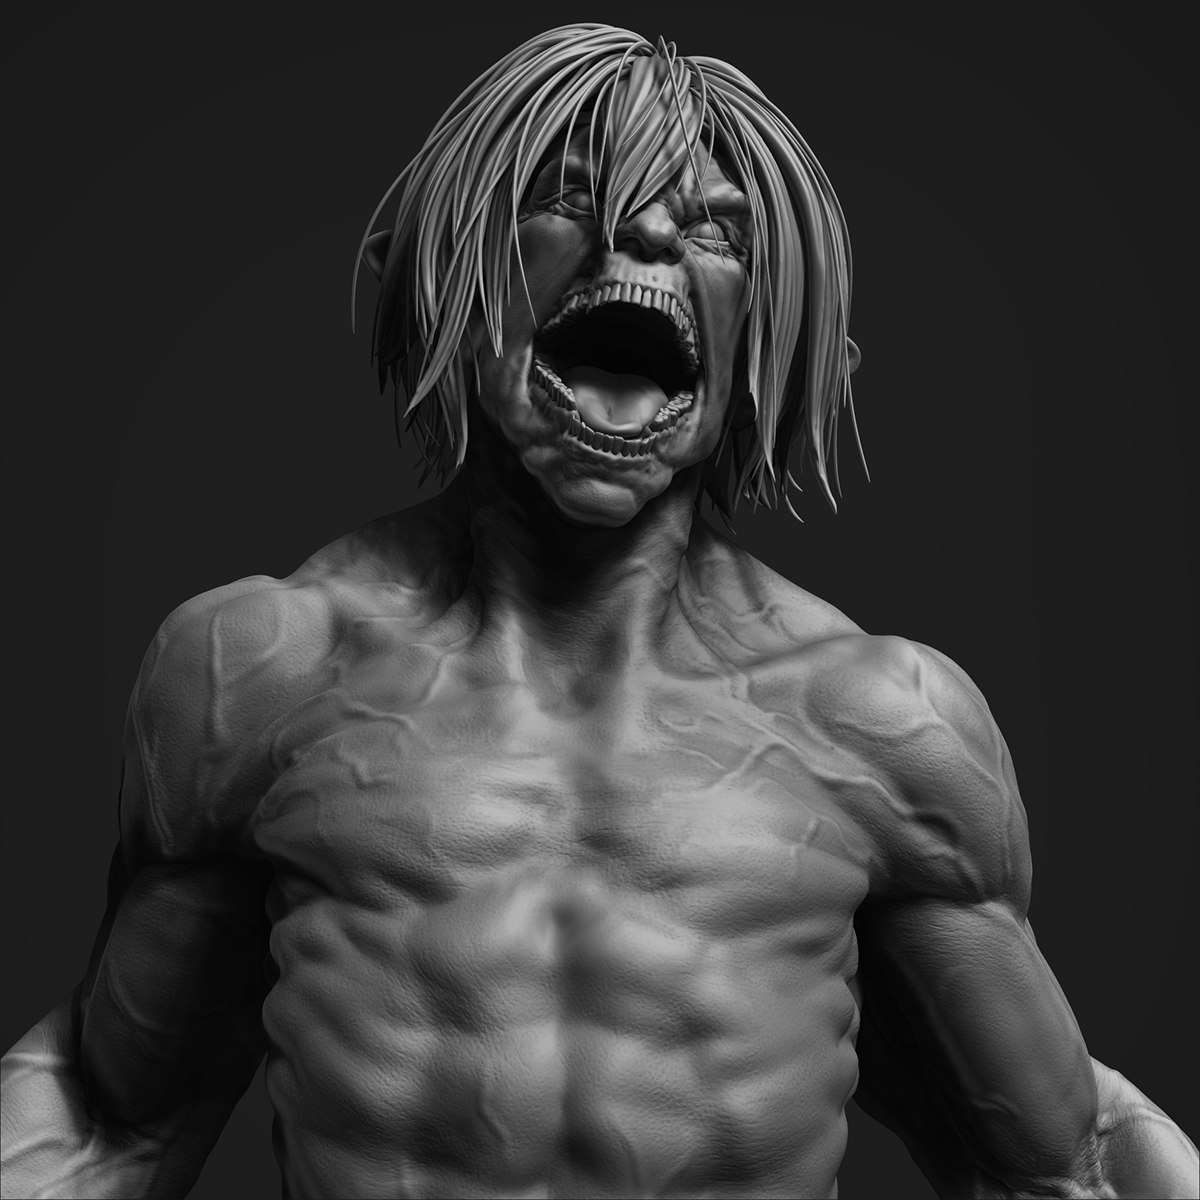 attackontitan Zbrush digitalsculpting fanart eren Jaeger Titan Posed actionfigure toy anatomy AnatomyStudy